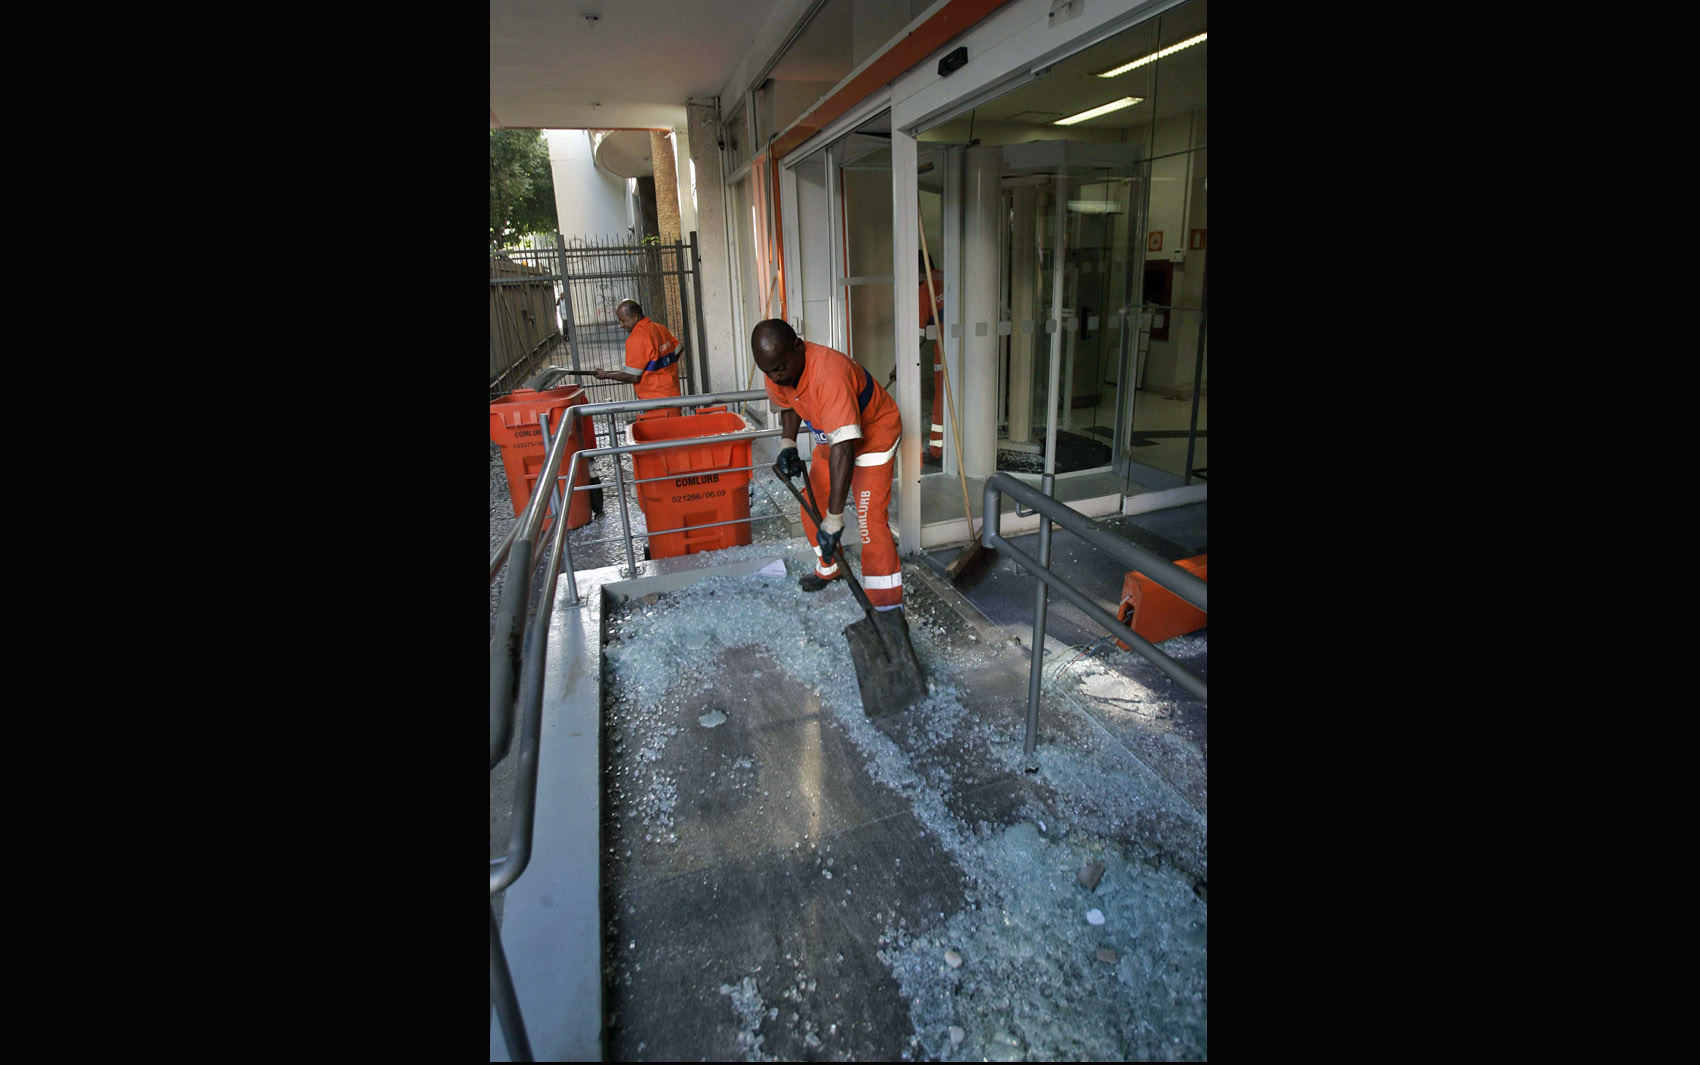 18/8 - Garis limpam vidro de agência bancária depredada durante protesto no Leblon